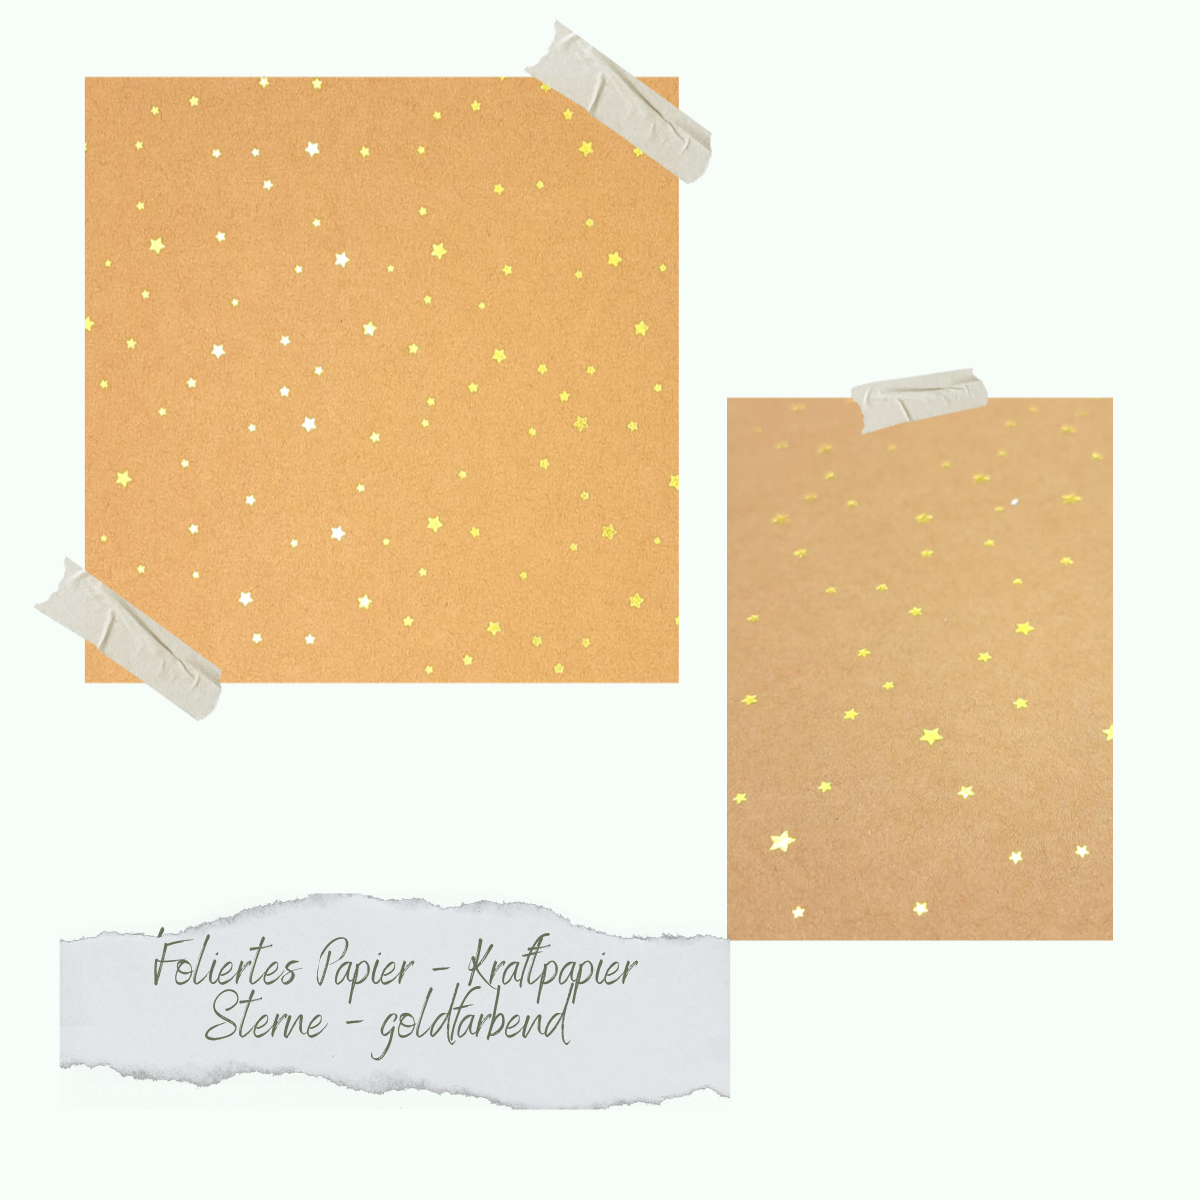 Foliertes Papier - Kraftpapier - Sterne - goldfarbend